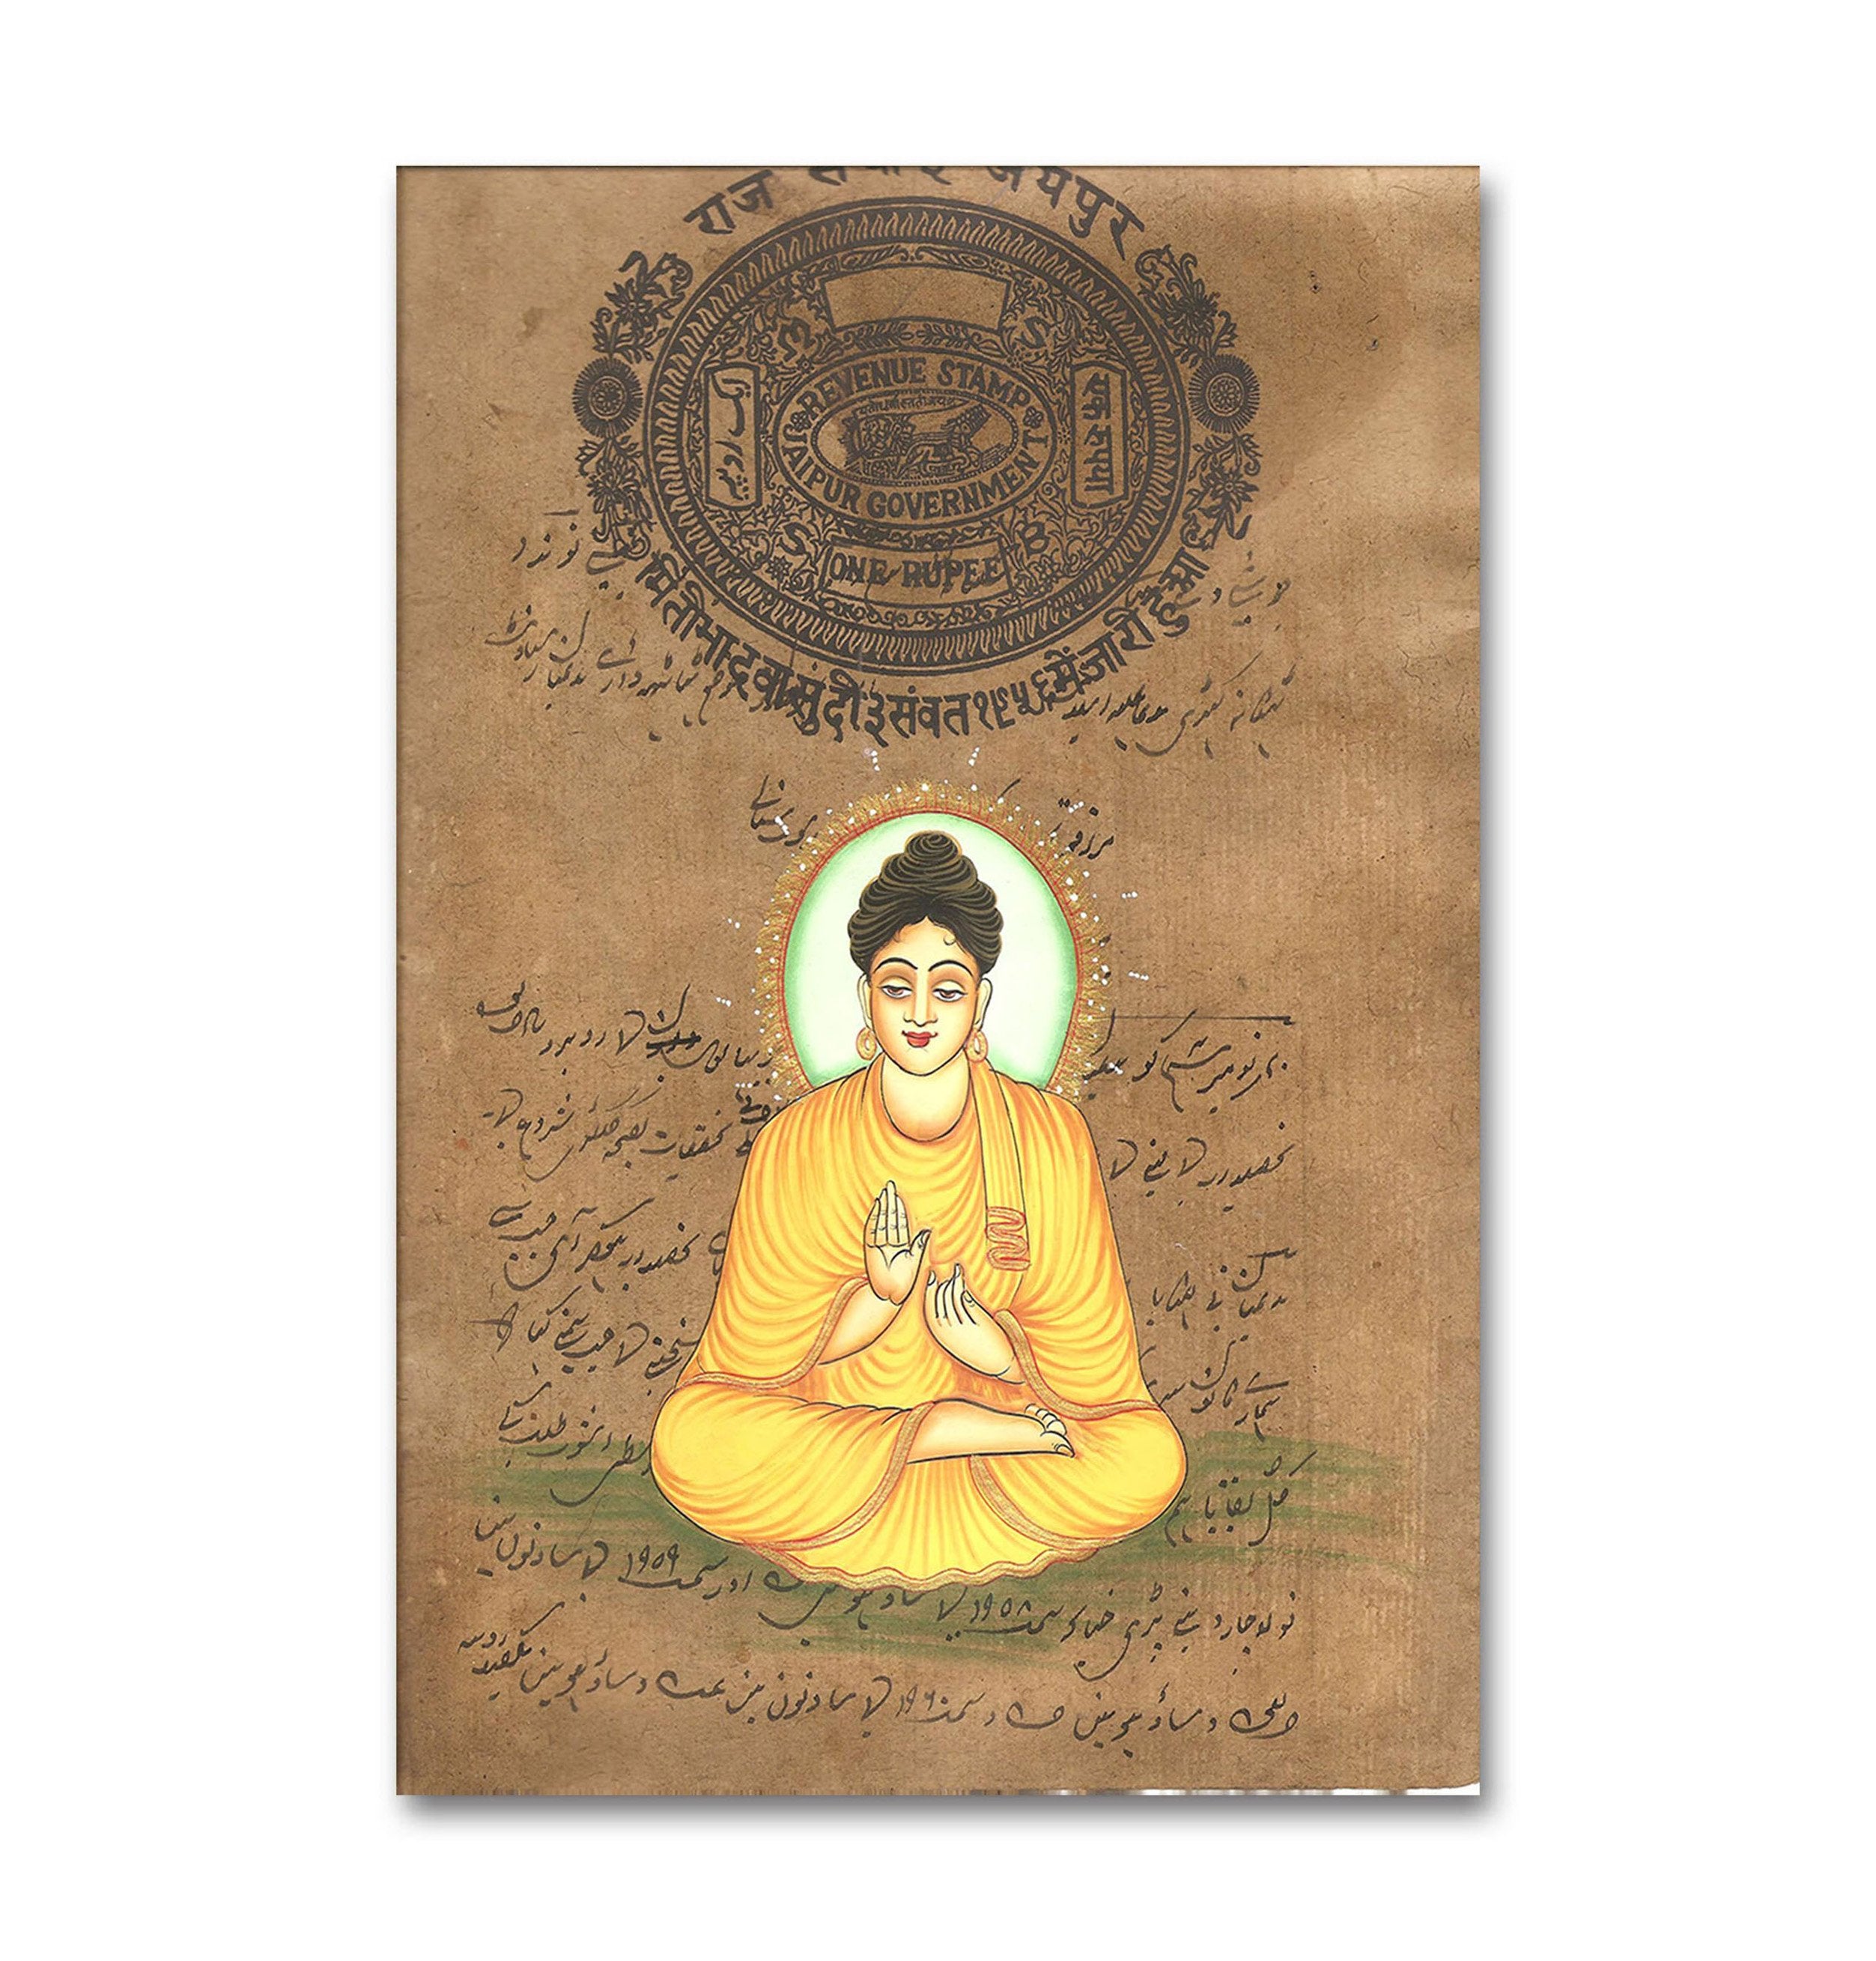 Gautam Buddha